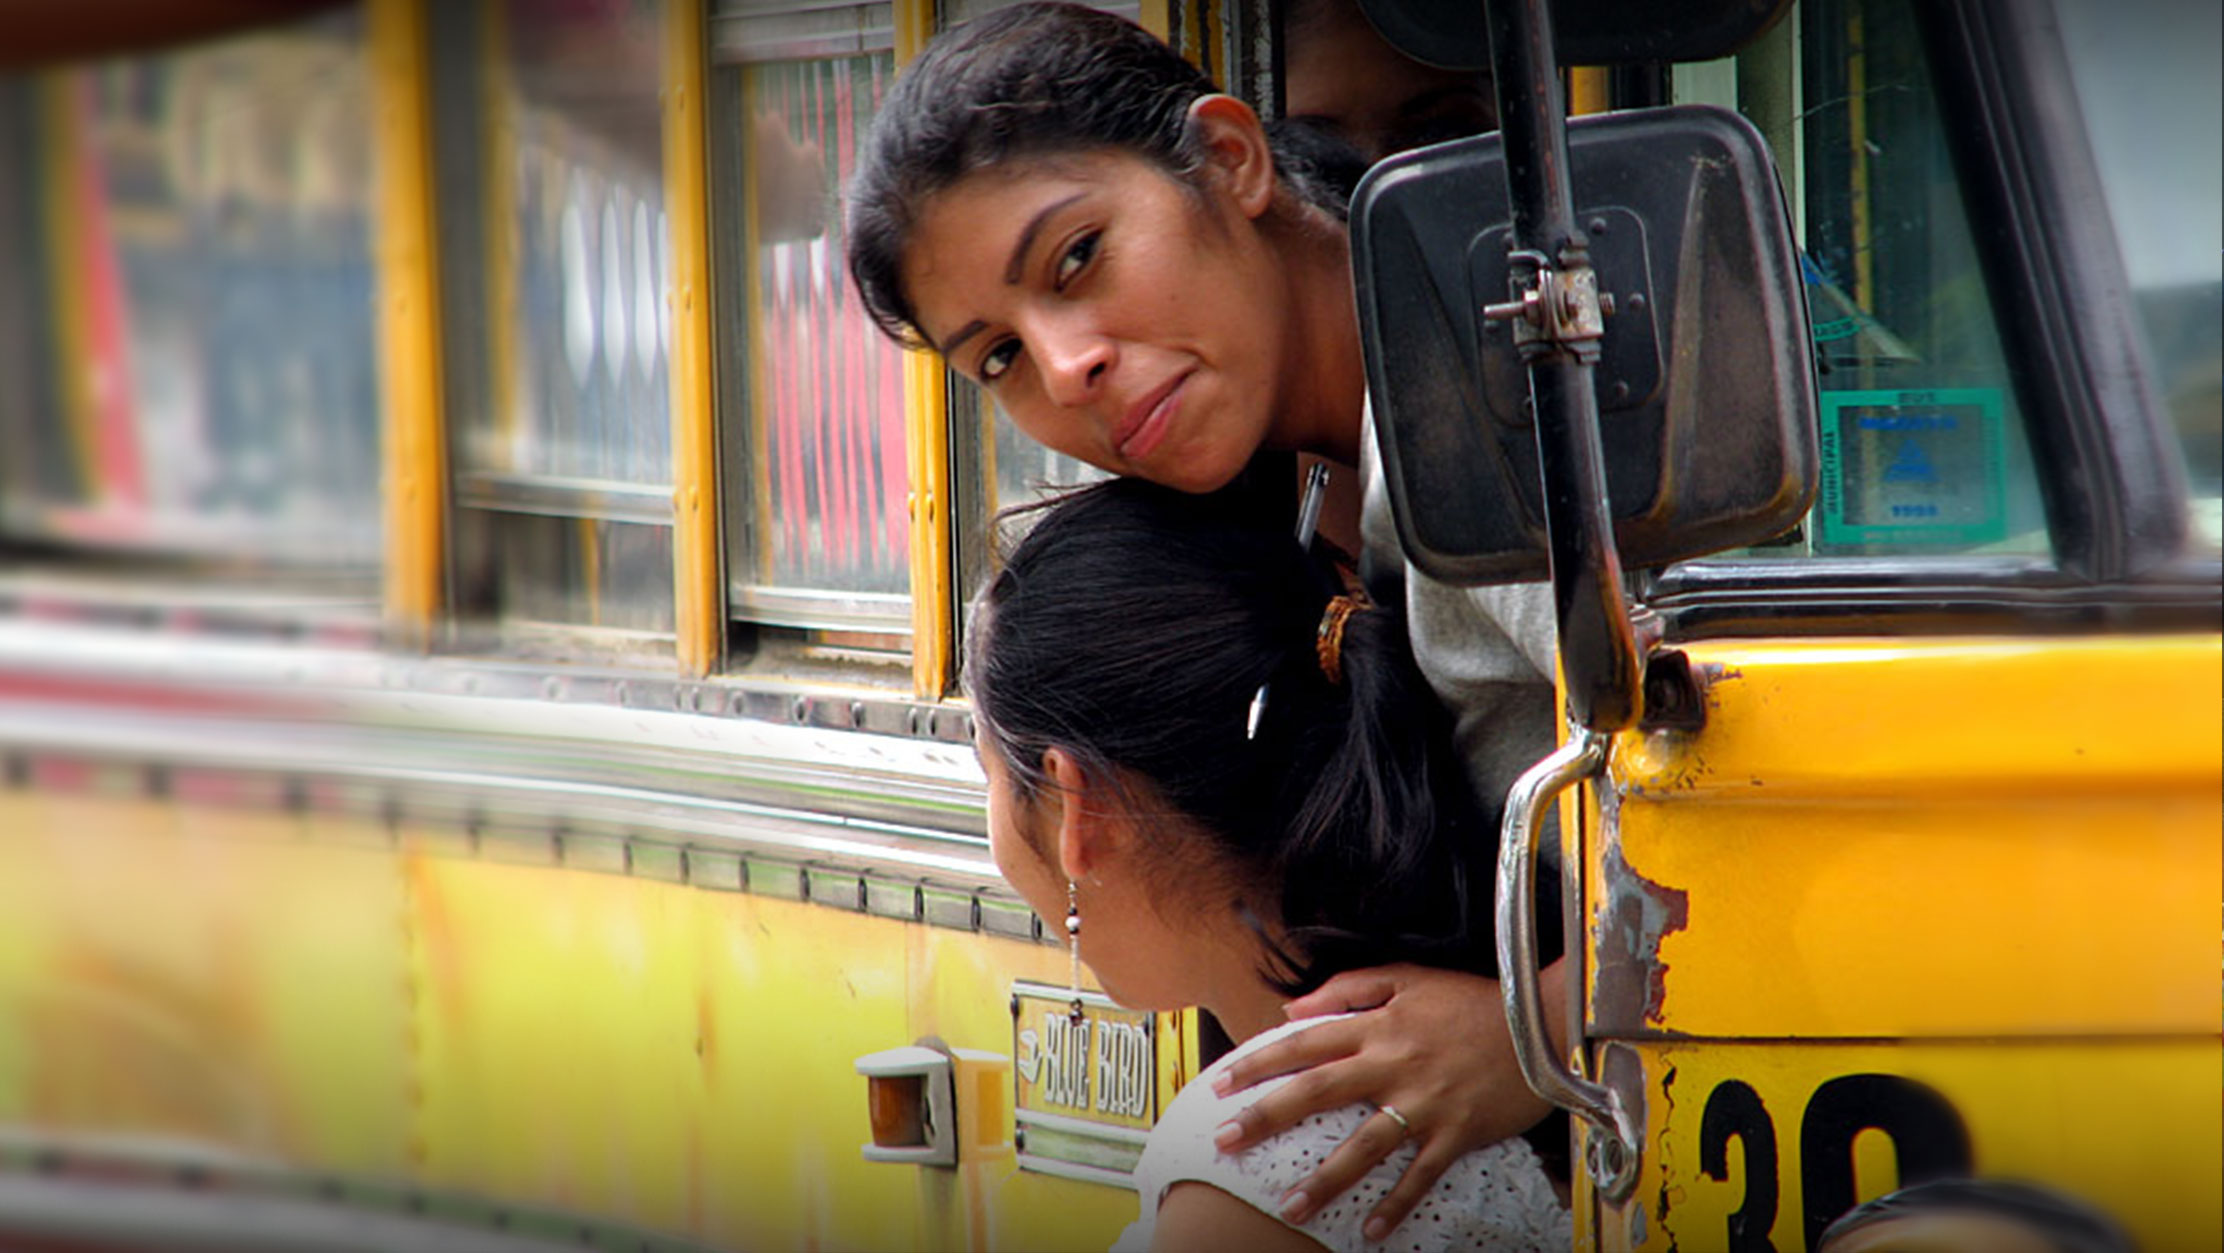 About_AnnualRep-Bus-LaPaz(Tina-Agerbak-Flickr)2224x1253.jpeg